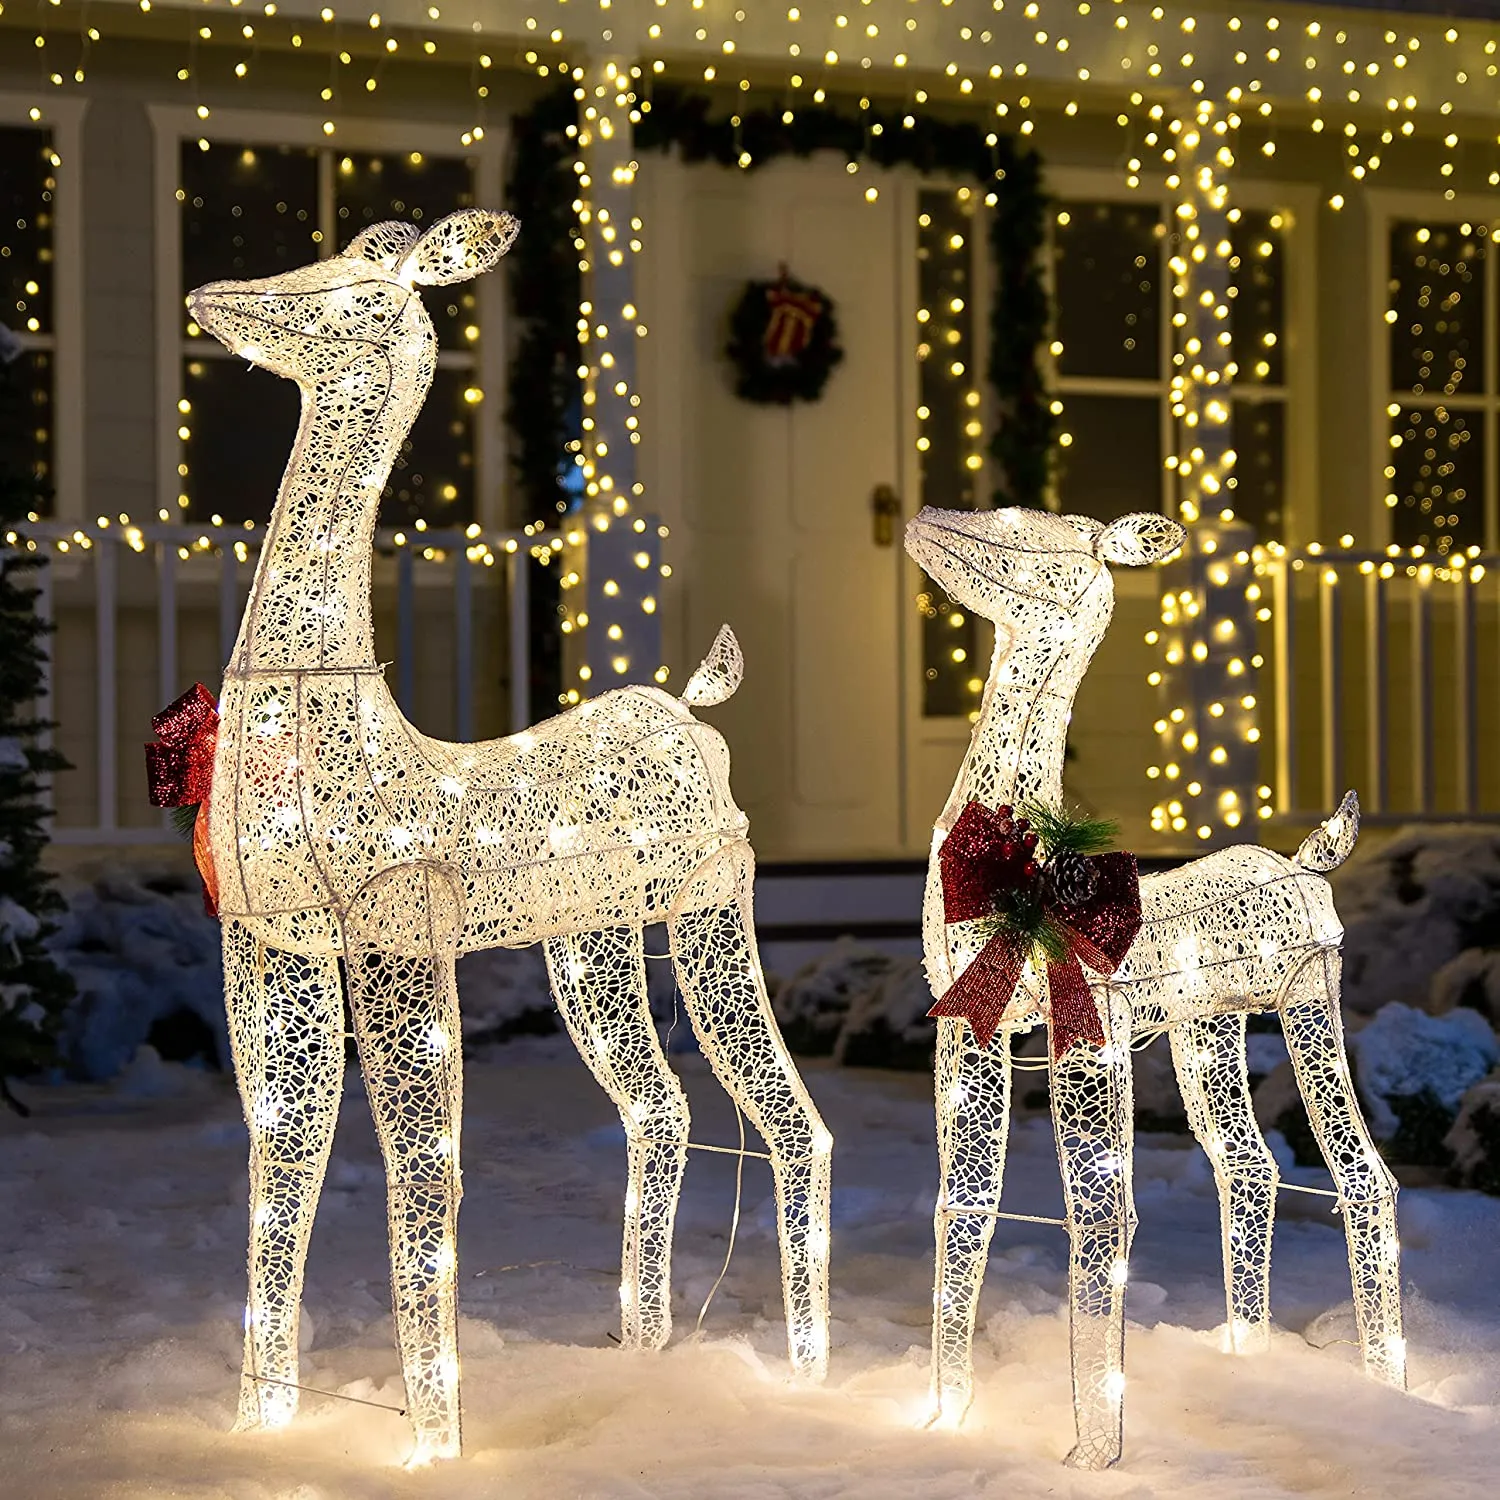 Glowing 130 LED Warm White Reindeer Yard Decorations